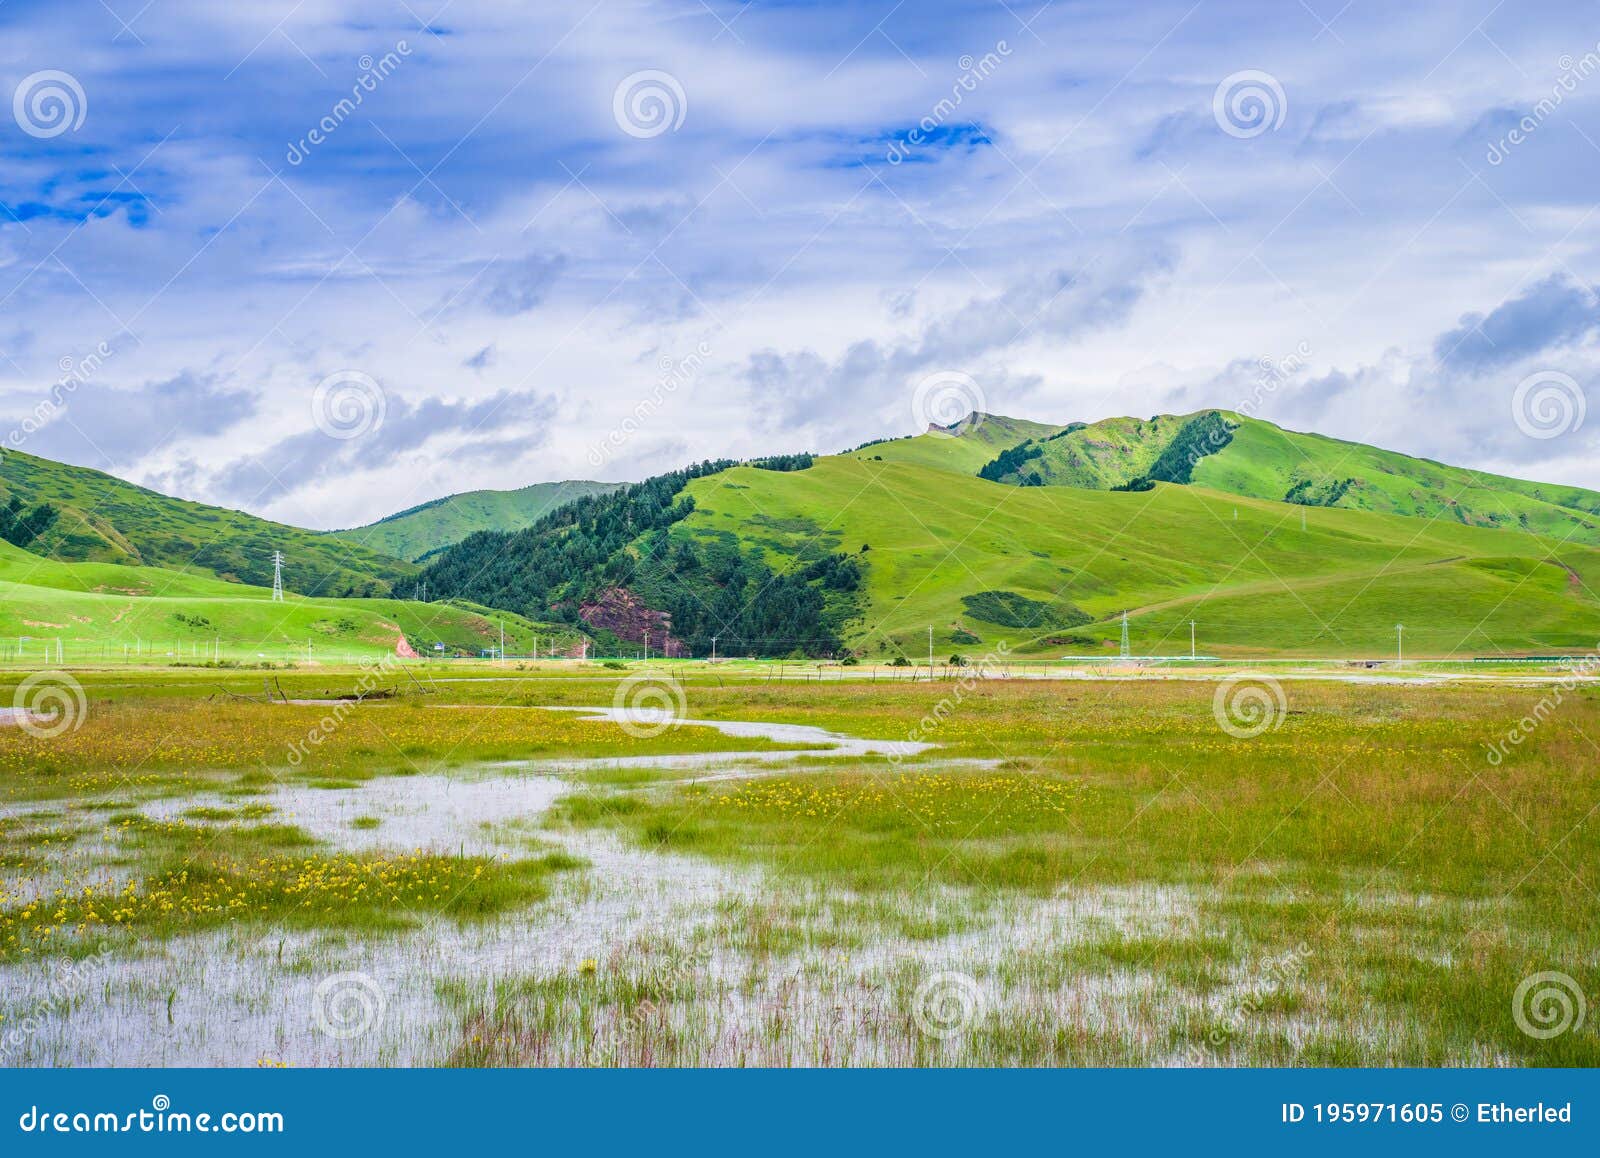 scenery of ruoergai grassland in early autumn